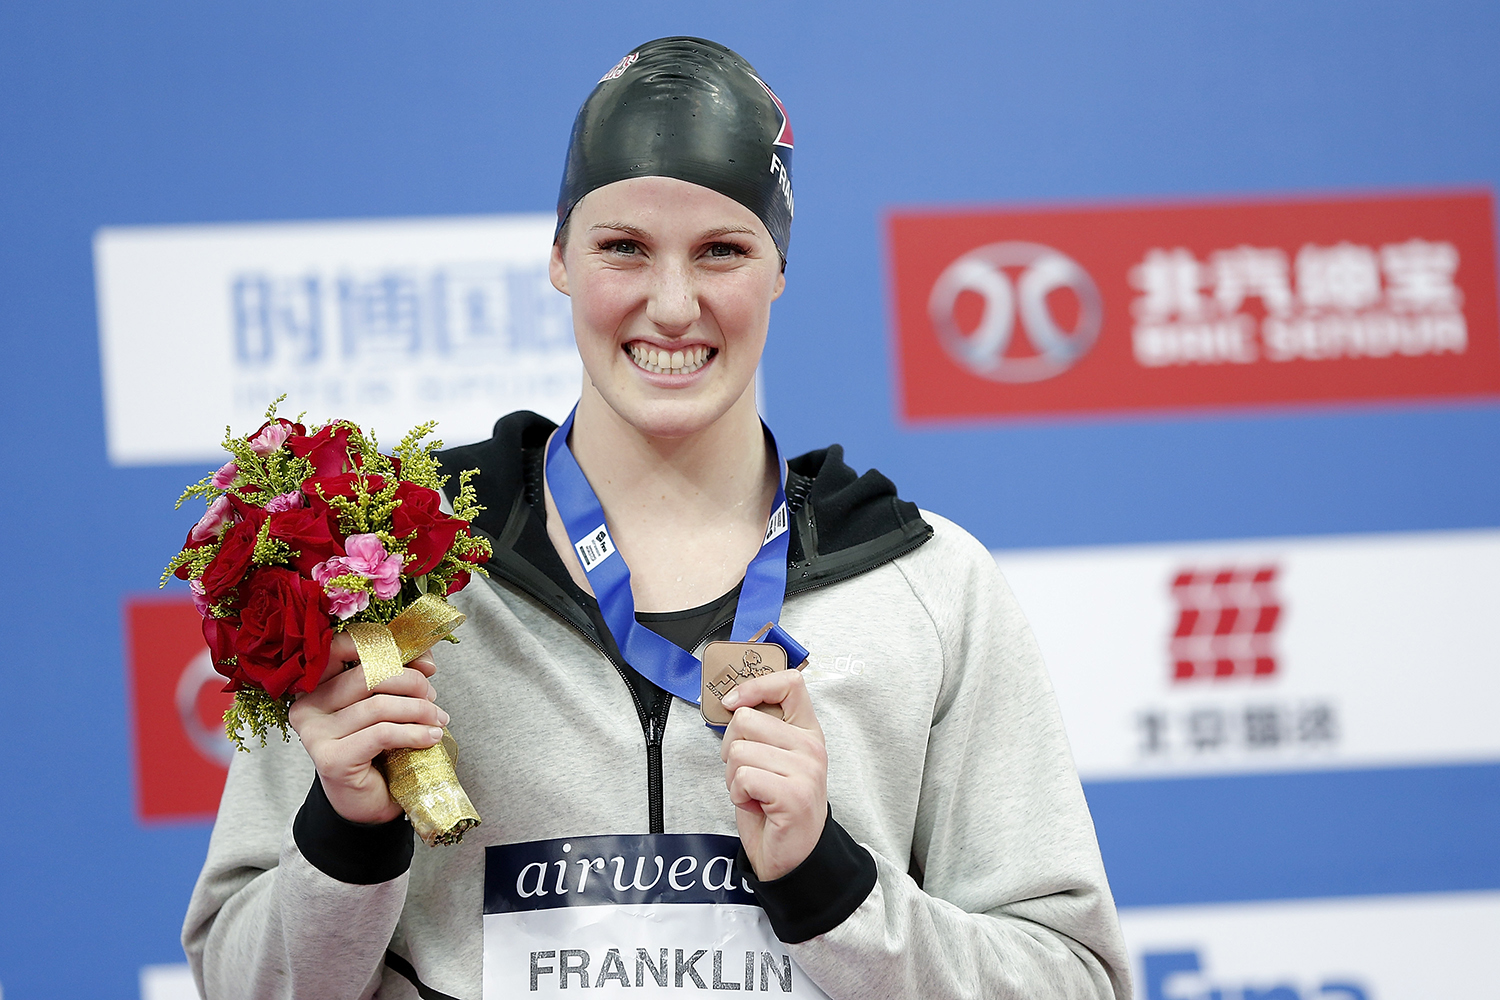 Campeã olímpica da natação, Missy Franklin se aposenta aos 23 anos